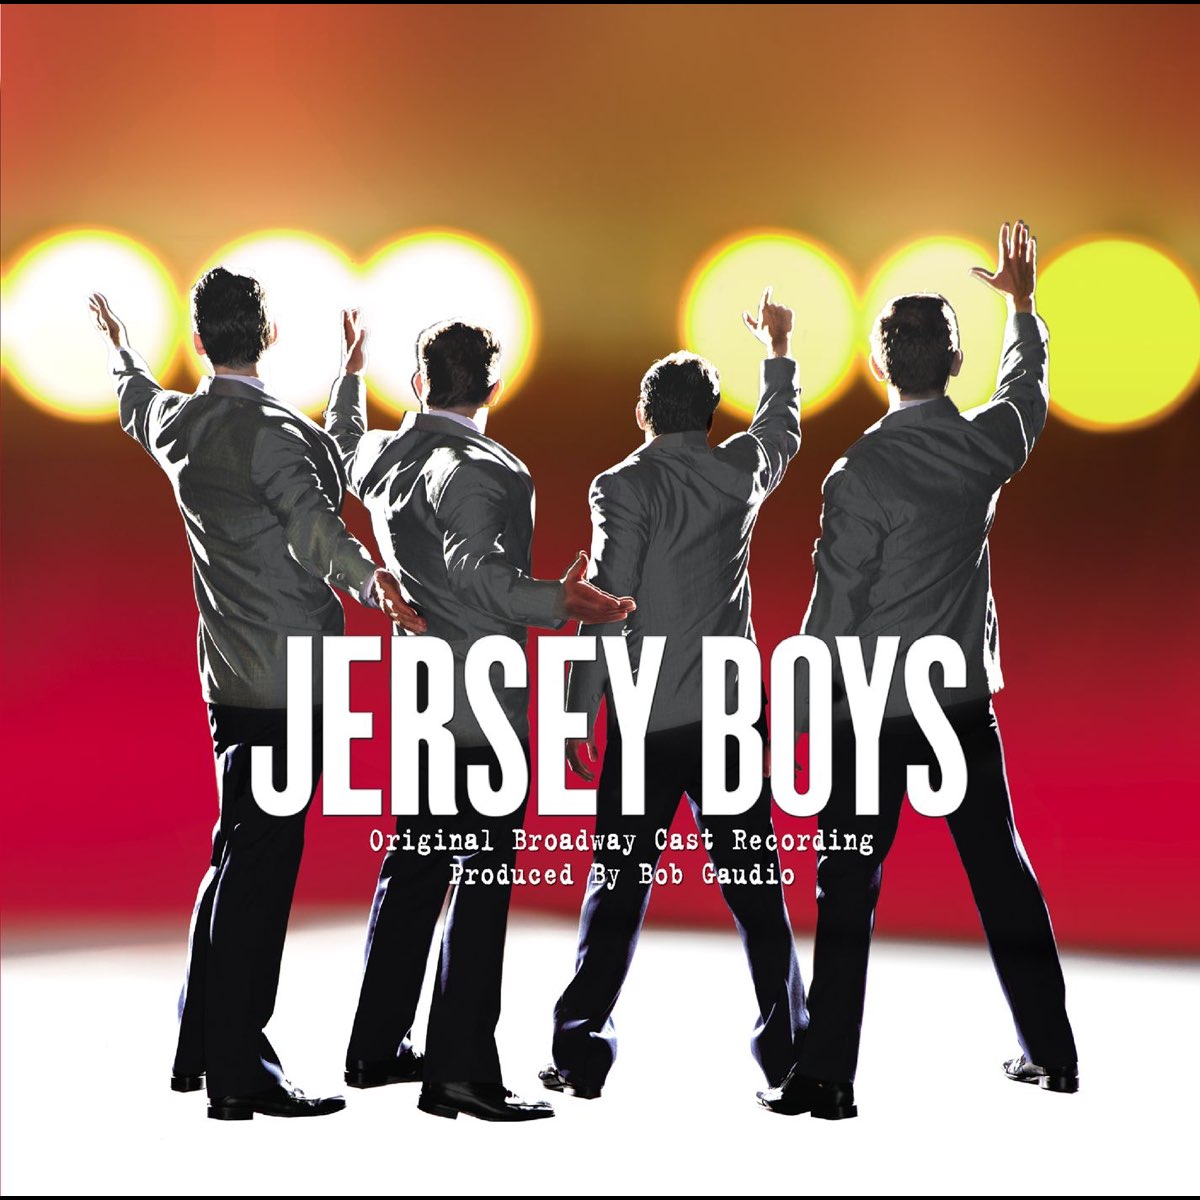 Jersey Boys (Original Broadway Cast Recording) by Jersey Boys on Apple Music